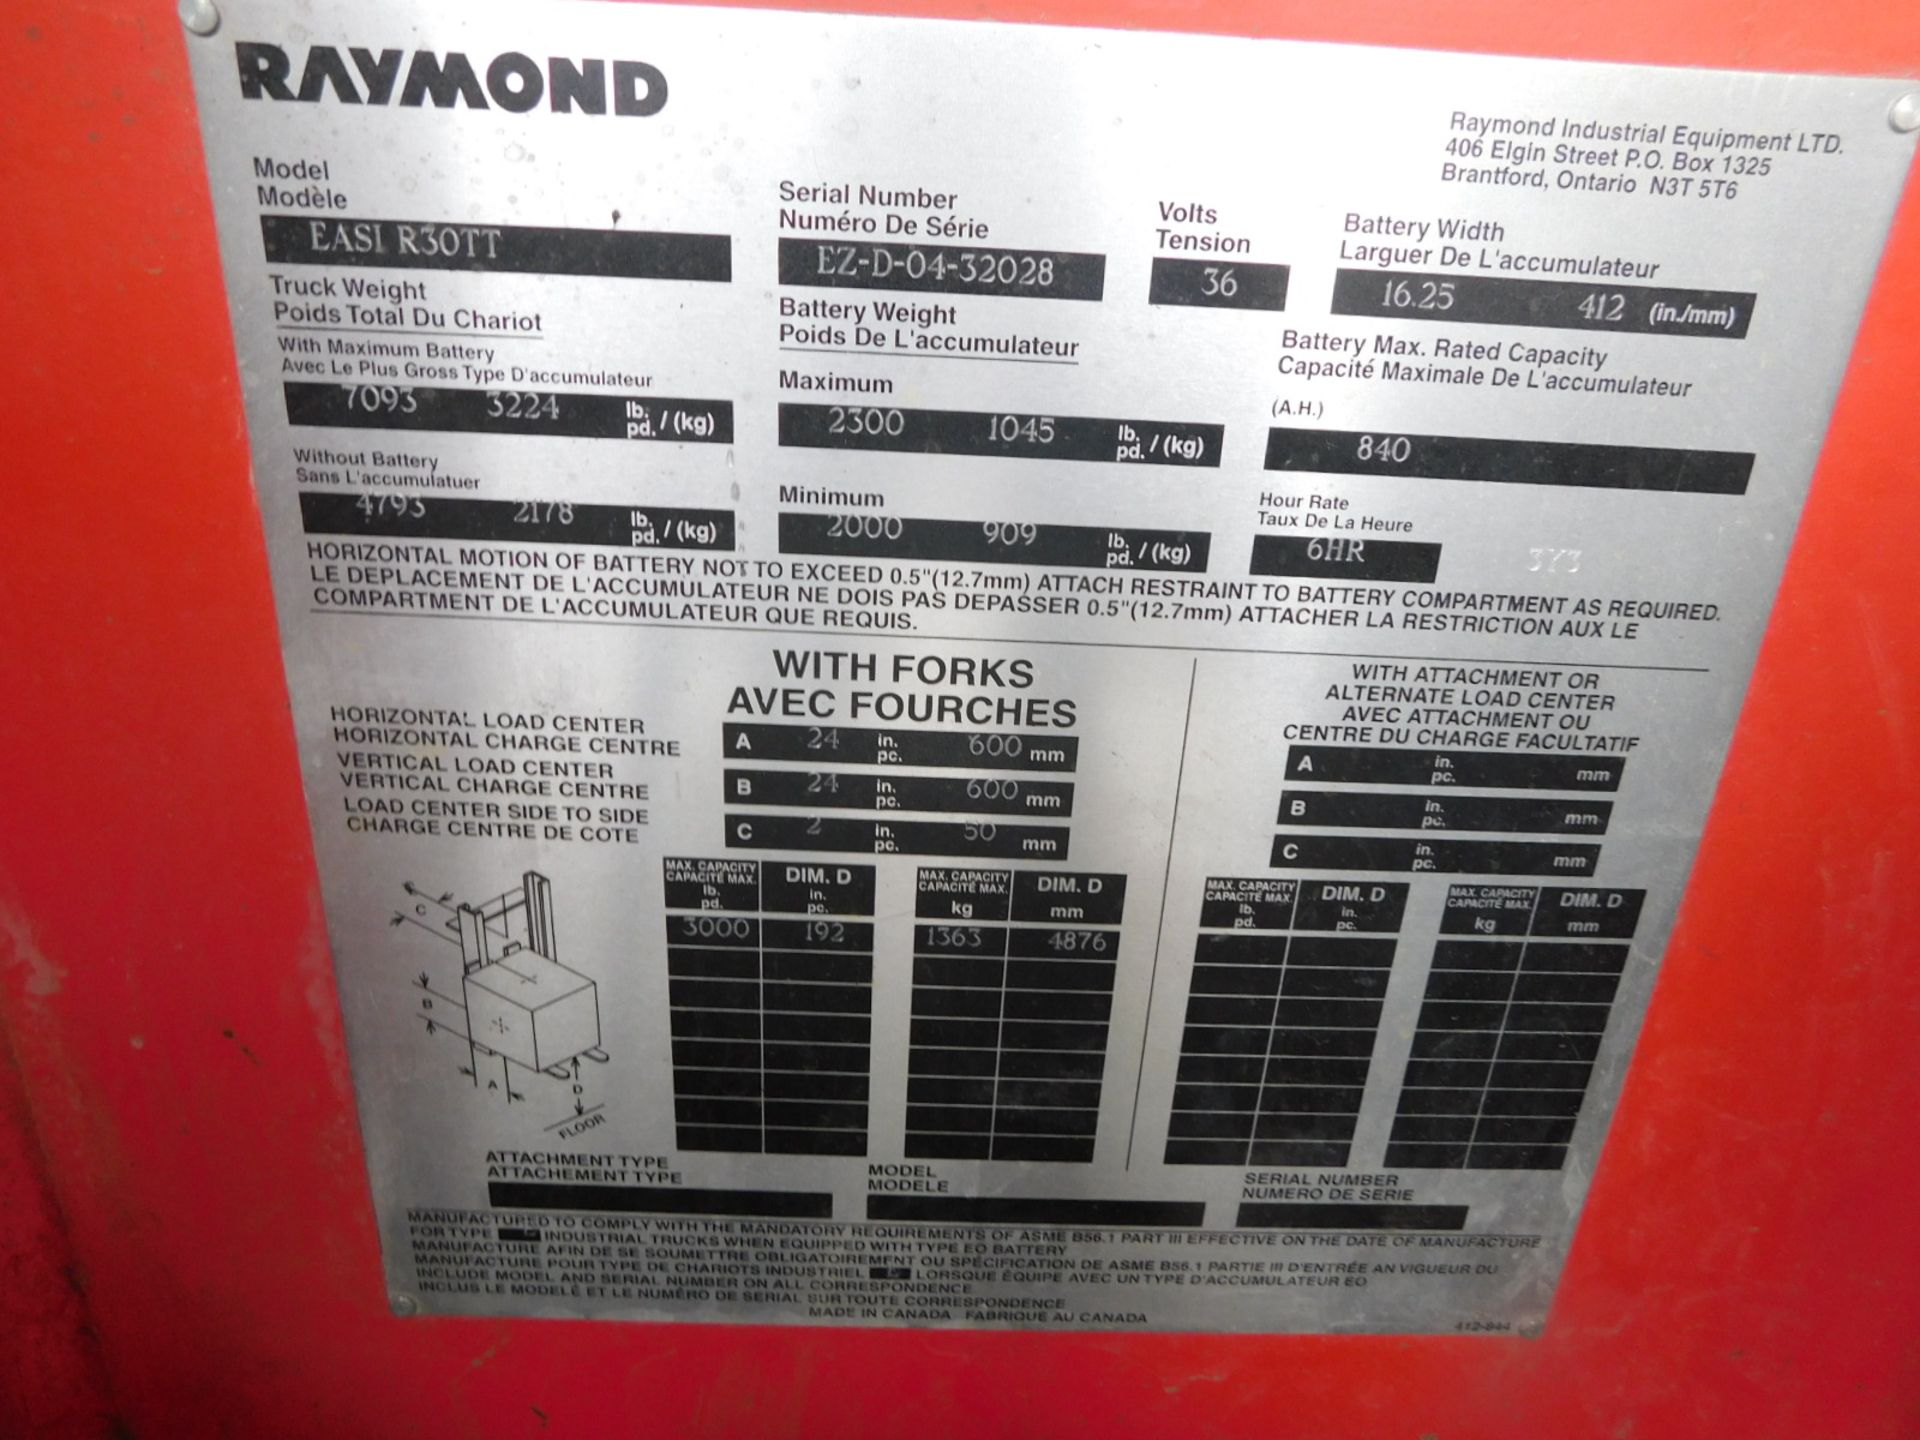 RAYMOND EASI R30TT NARROW ISLE REACH TRUCK, STAND-UP,3000LB, 192" LIFT,S/N EZ-D-04-32028, C/W - Image 5 of 6